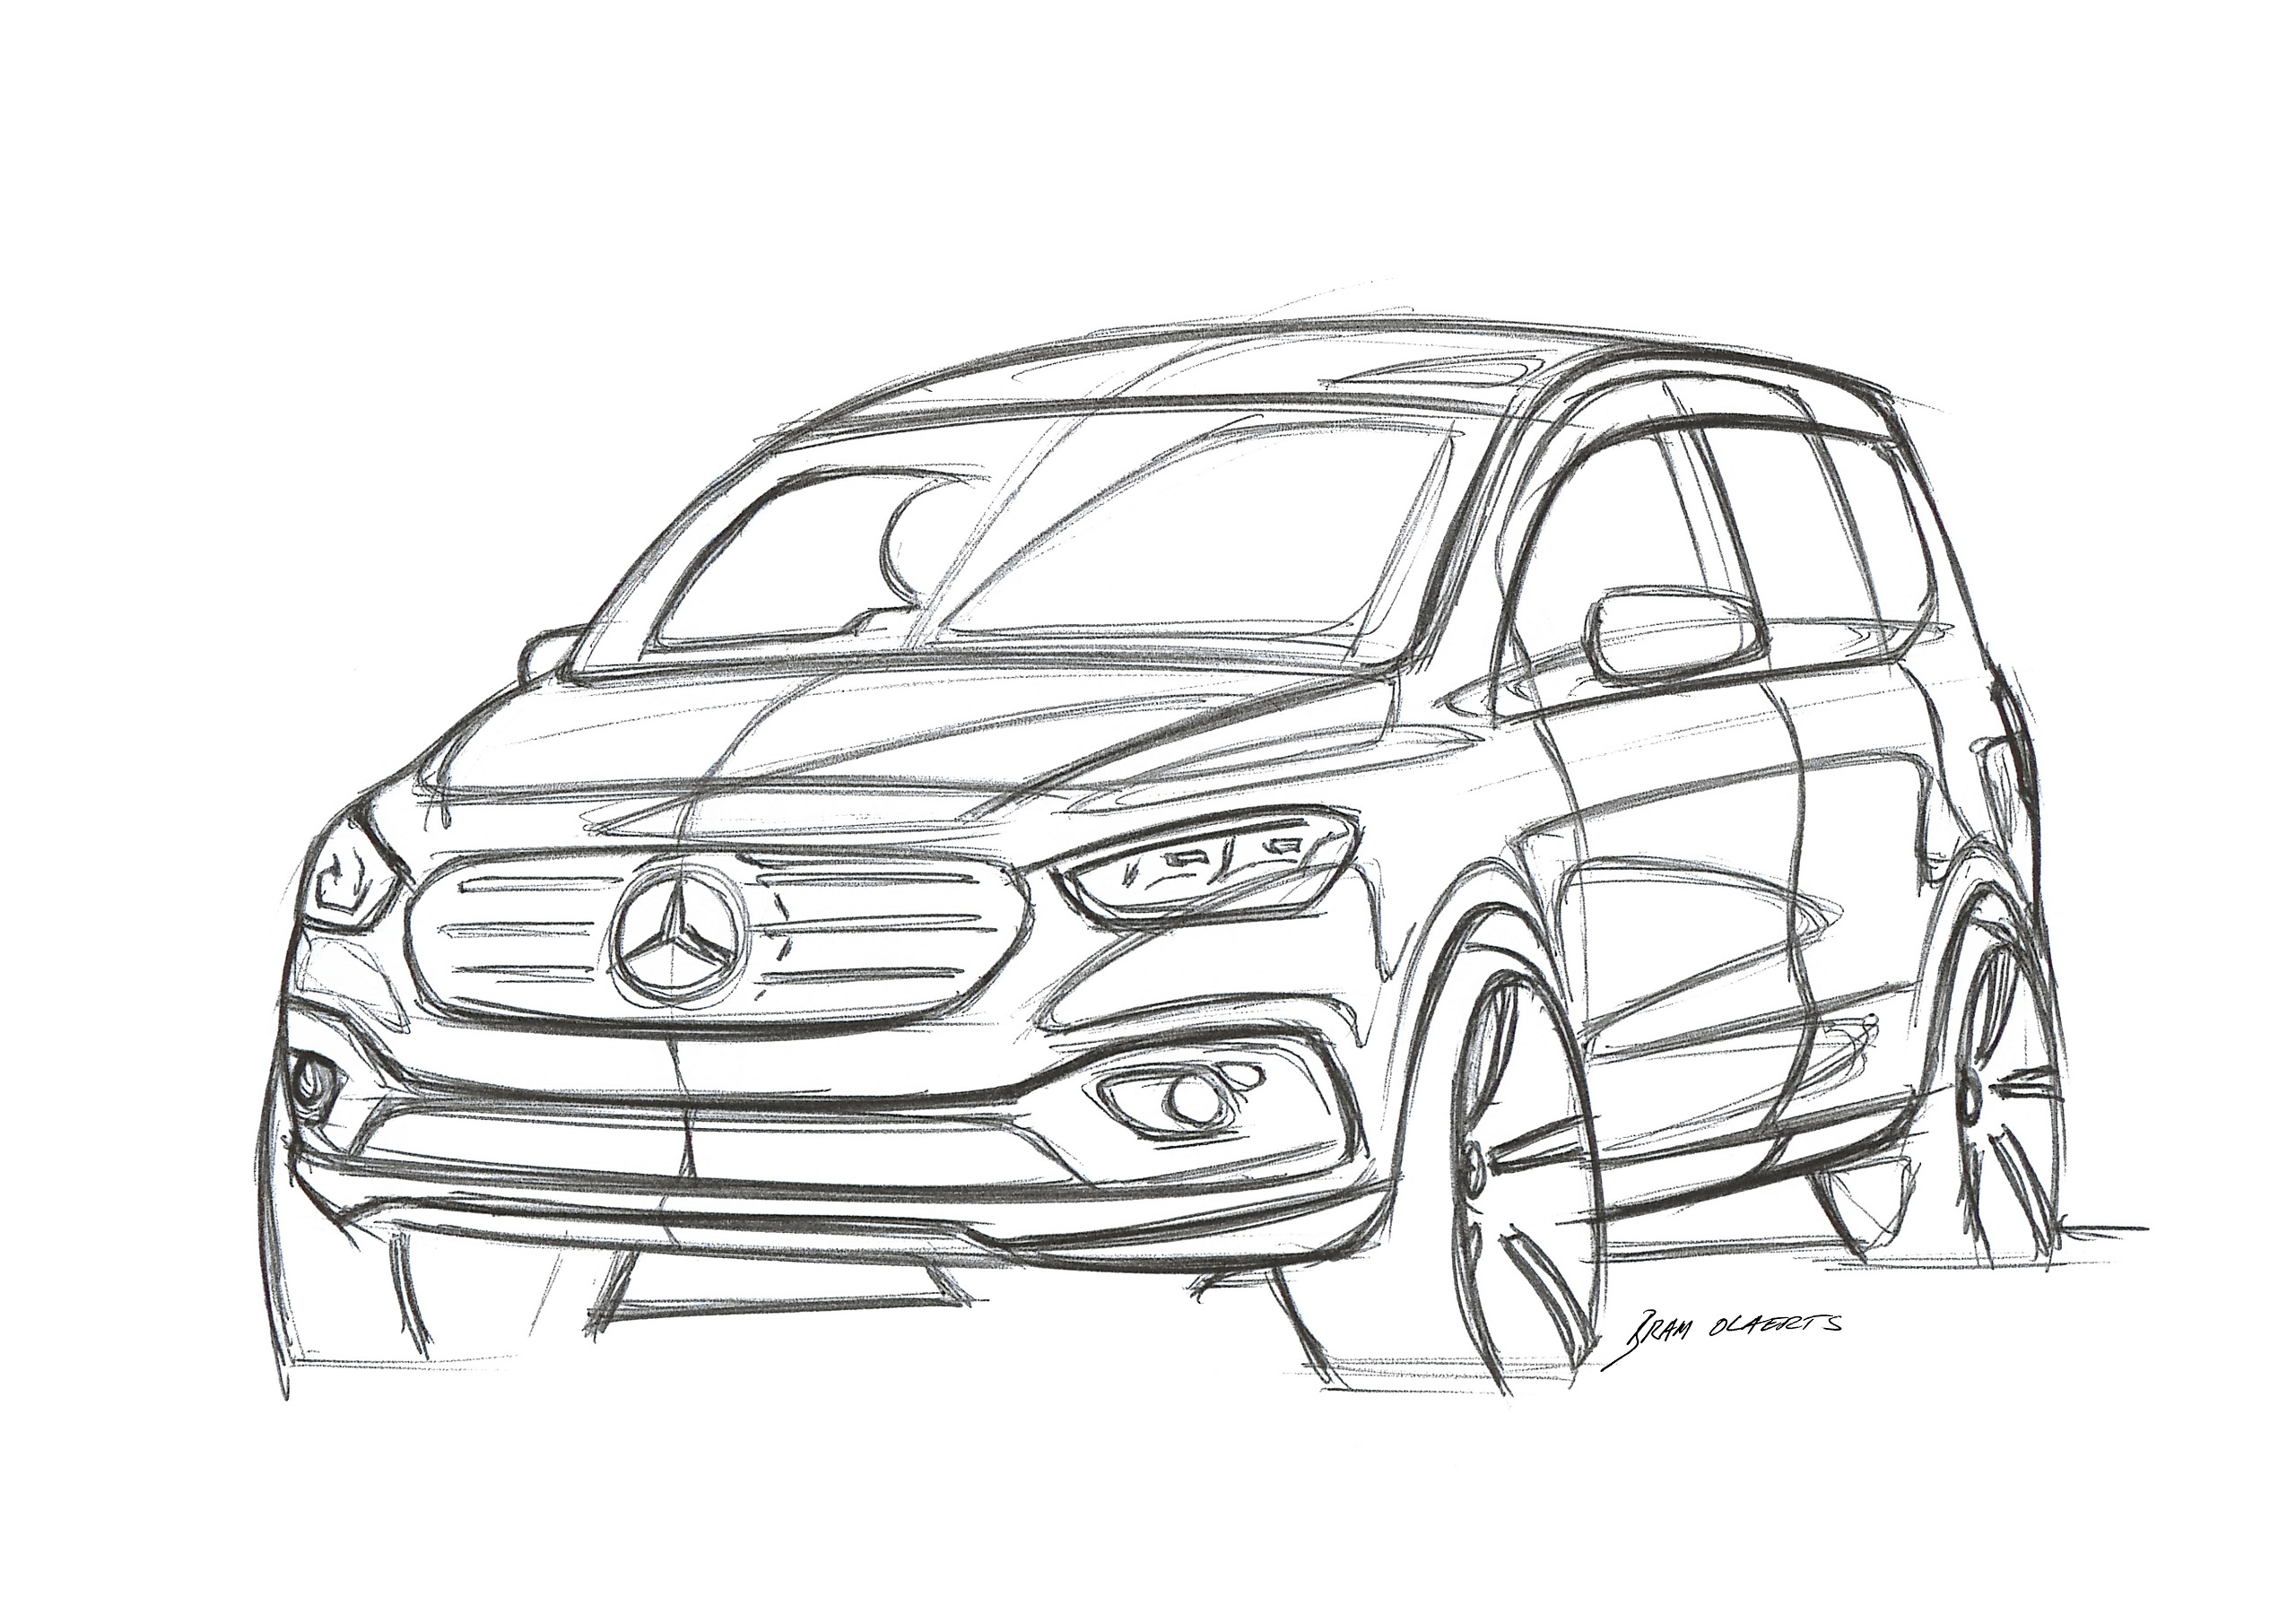 2022 Mercedes-Benz Citan Design Sketch Wallpapers #115 of 115